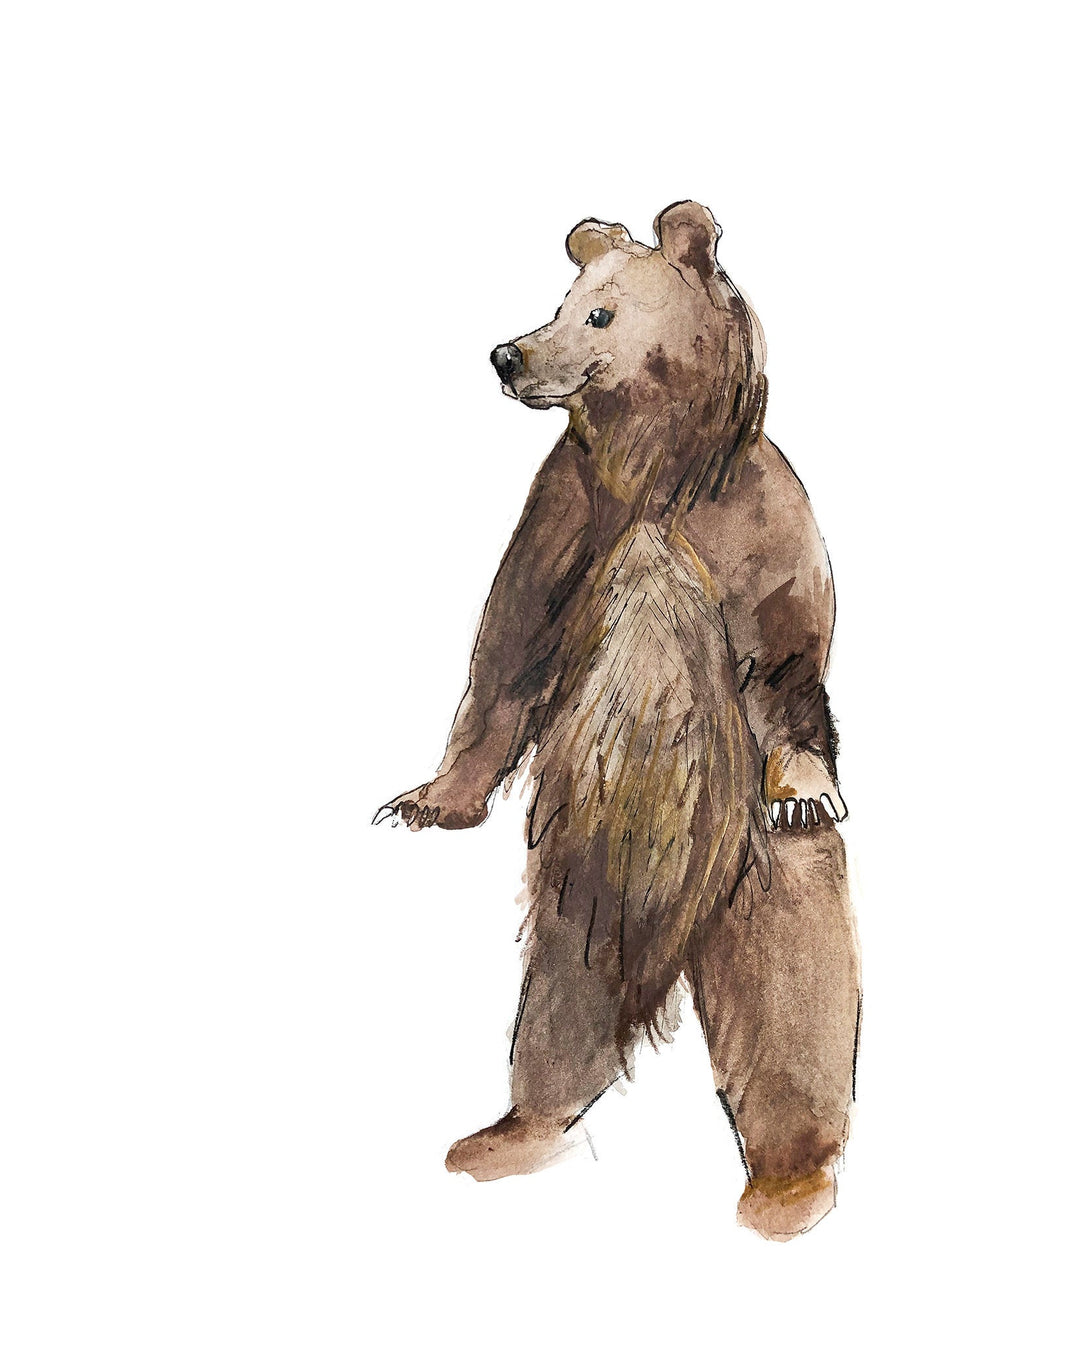 Illustration - Forest animals - Standing bear